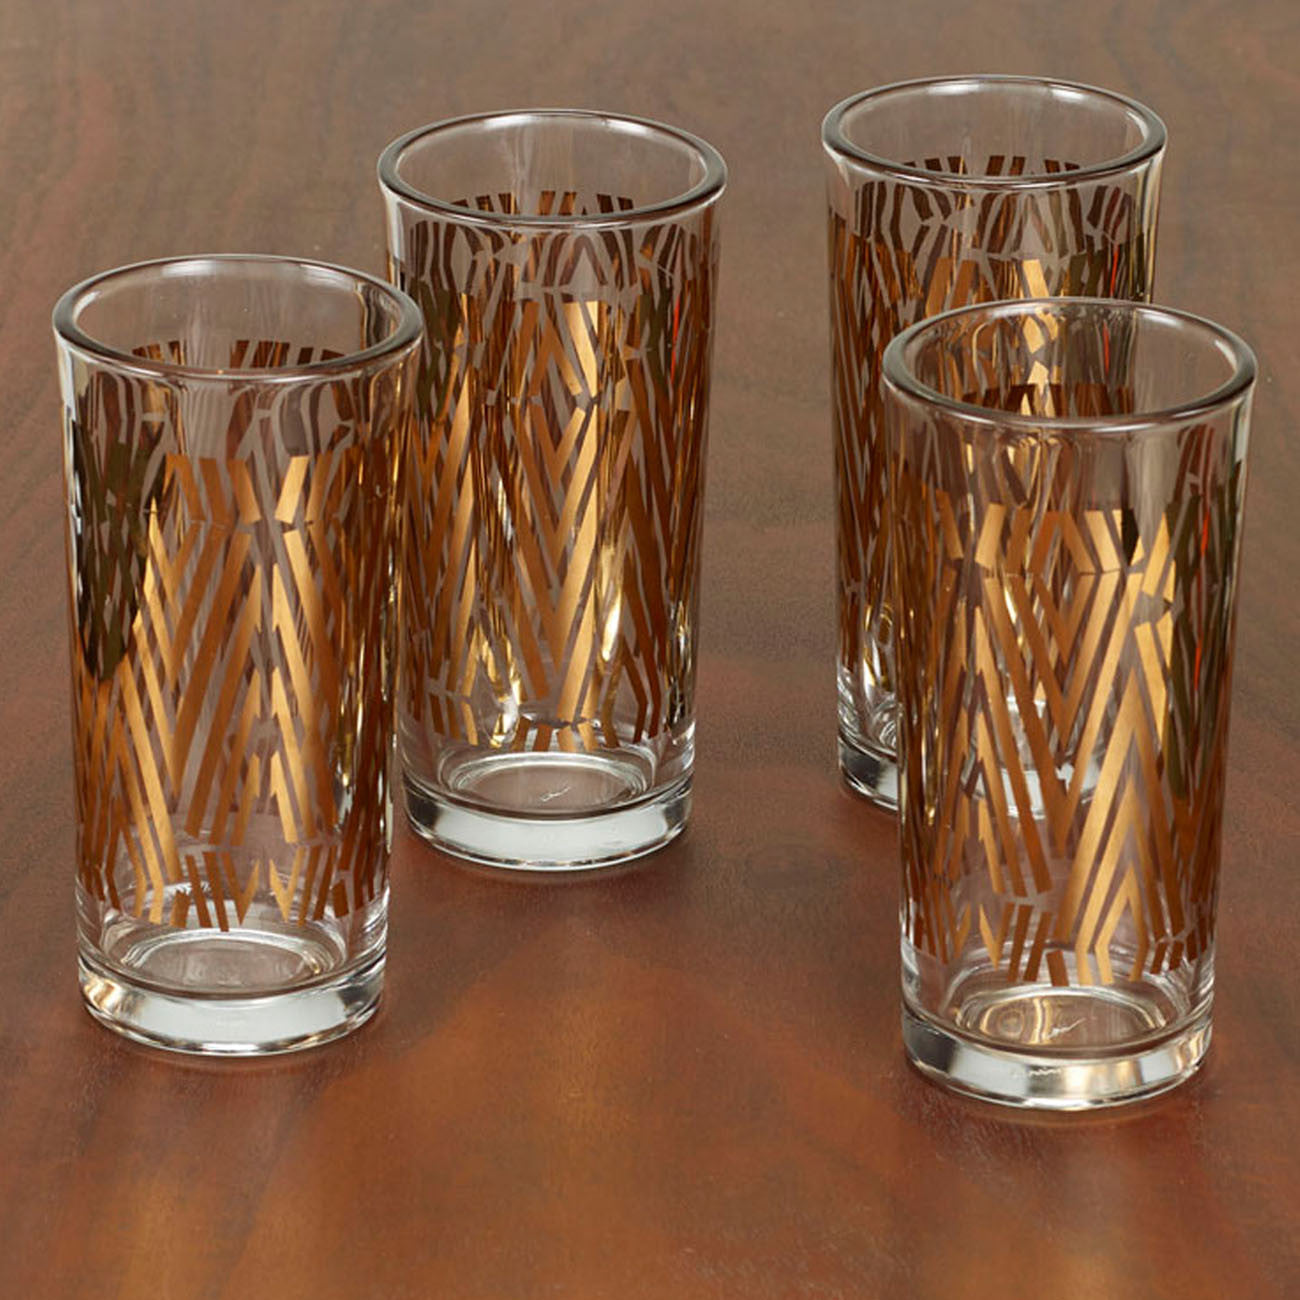 zuzu metallic glasses, set of four